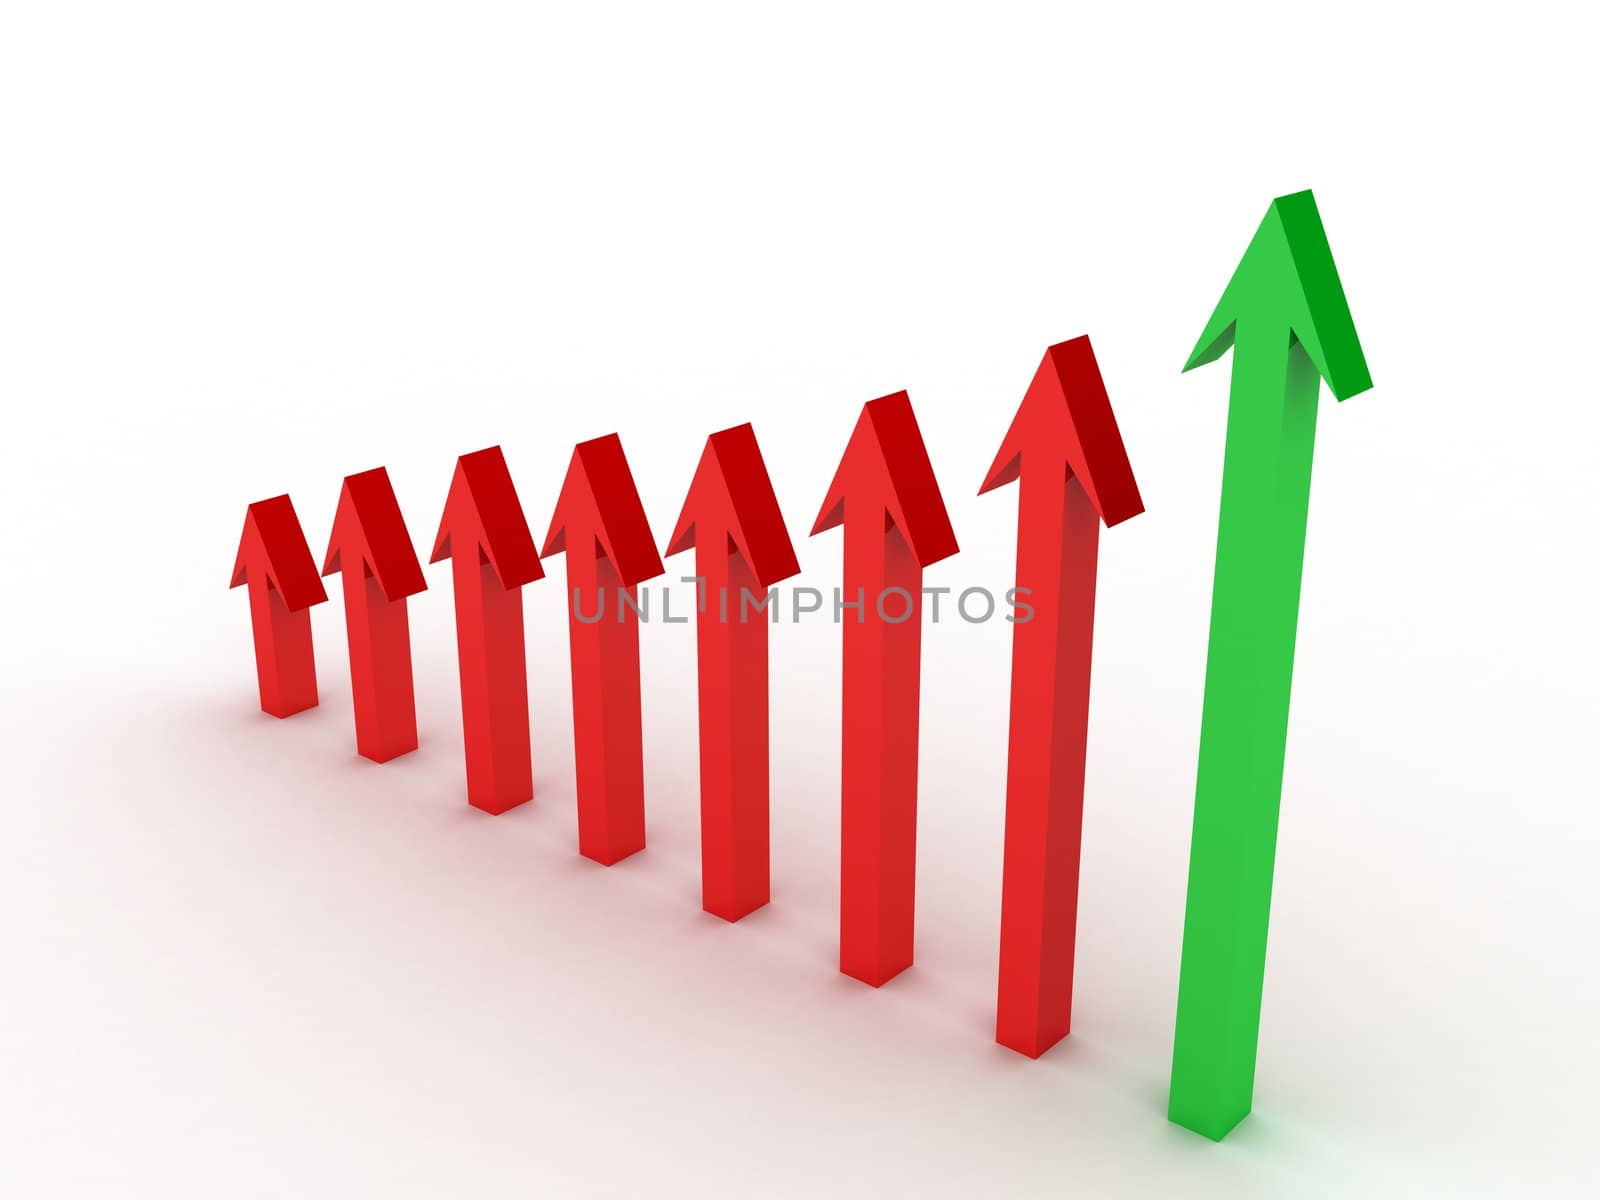 three dimensional arrow indicating profit over loss